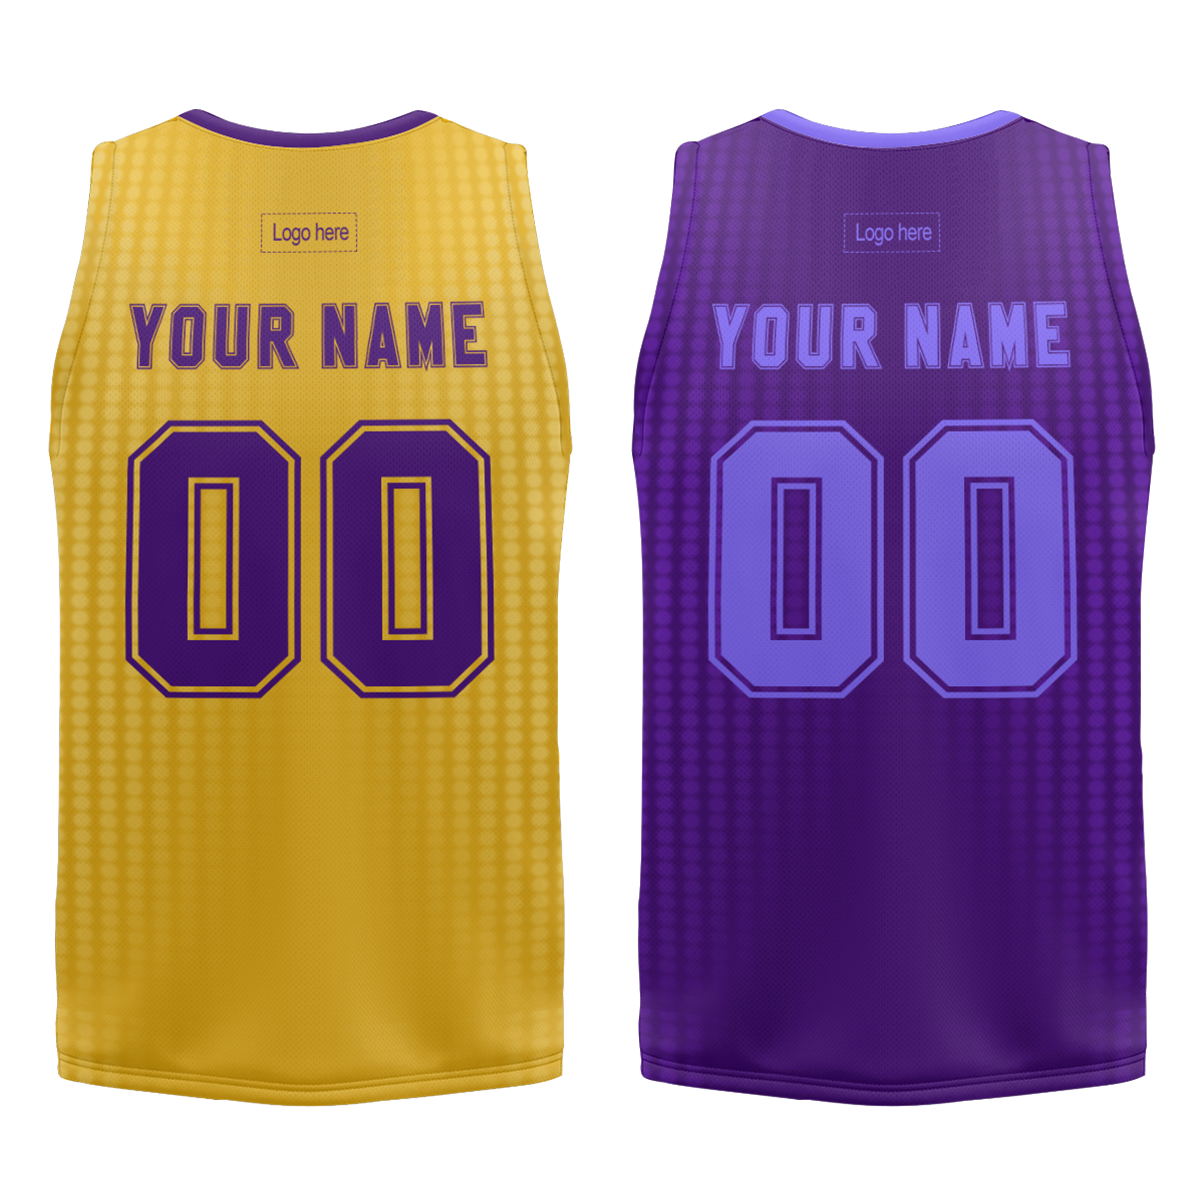 oem-service-custom-cool-design-new-style-basketball-jerseys-quick-dry-basketball-uniforms-at-cj-pod-6